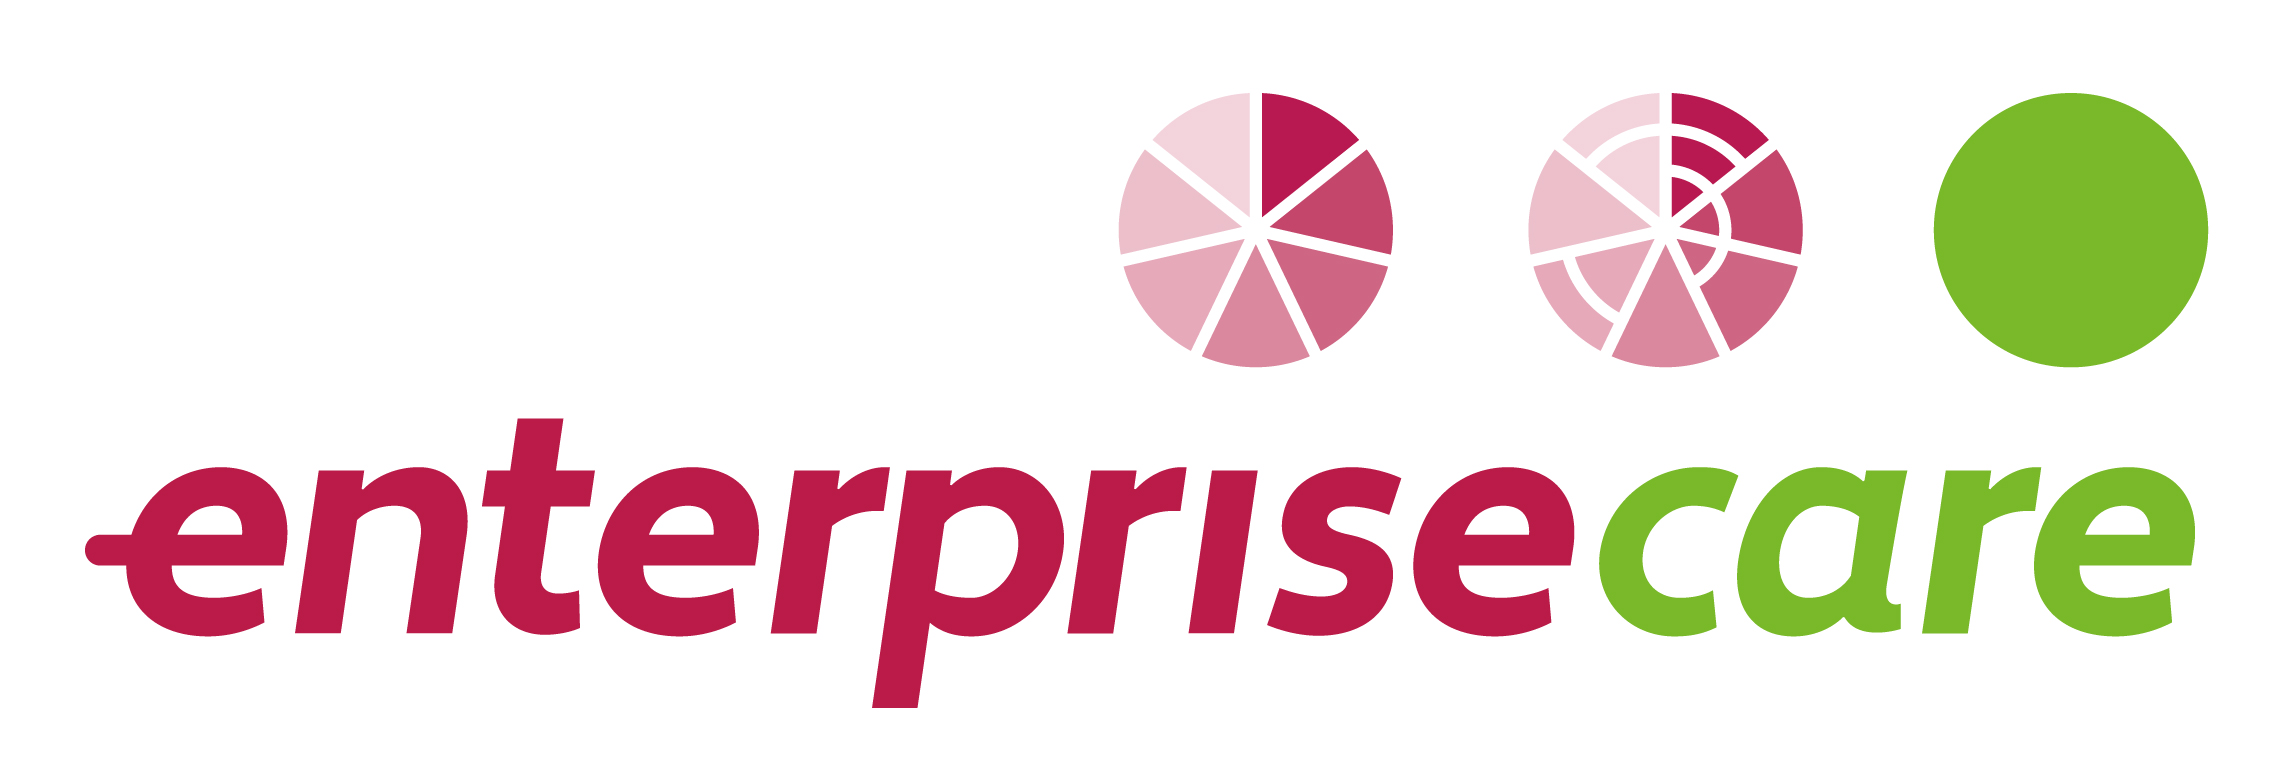 Enterprise Care